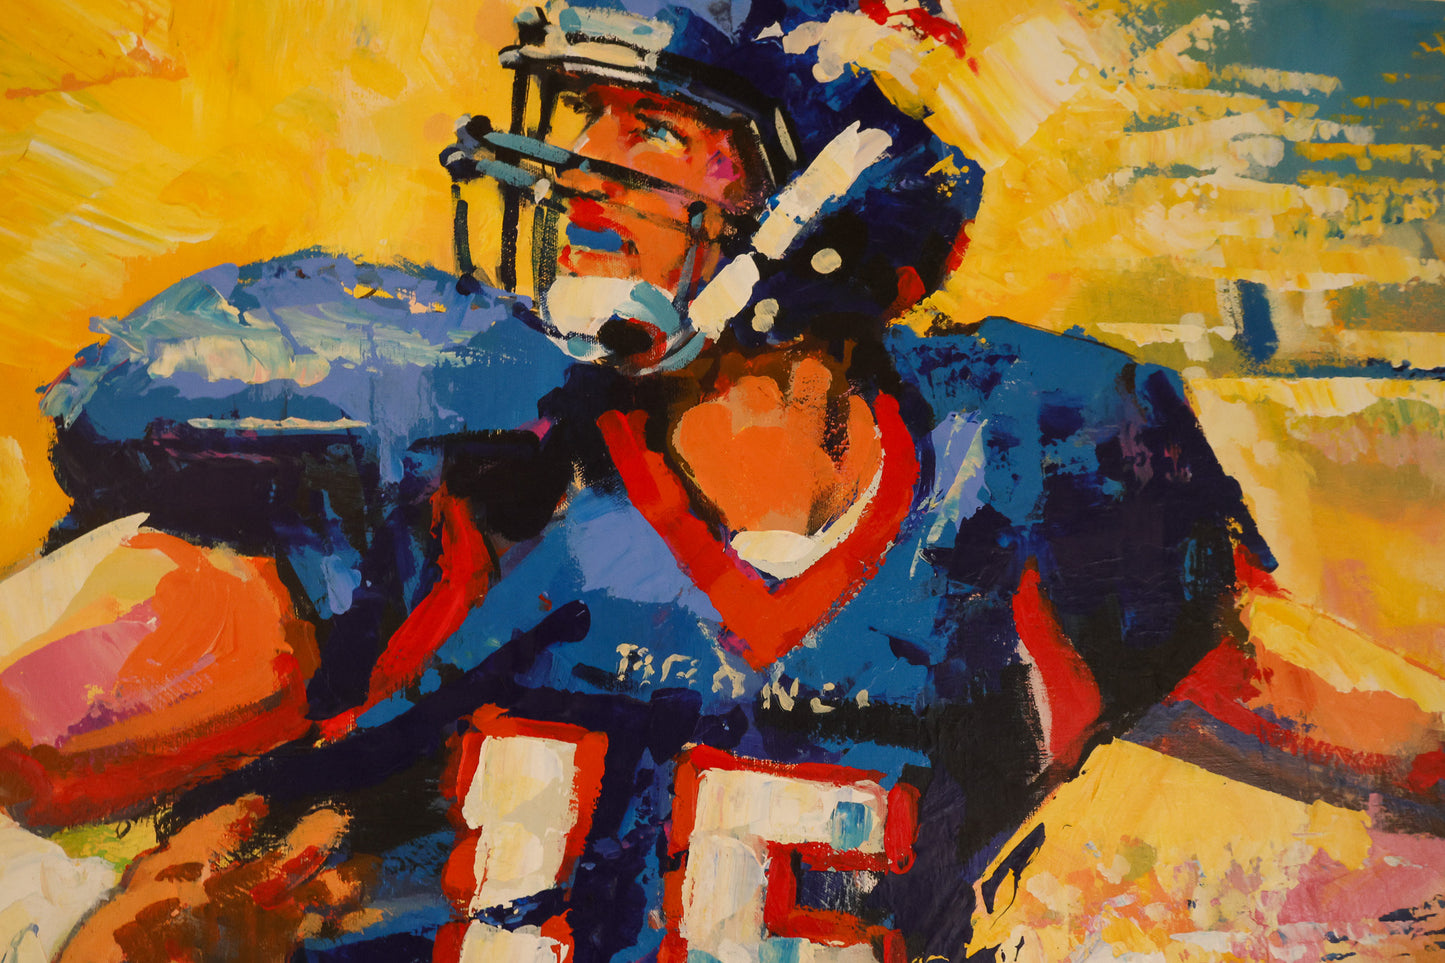 Tim Tebow Denver Broncos giclee on canvas by Malcom Farley Horizontal